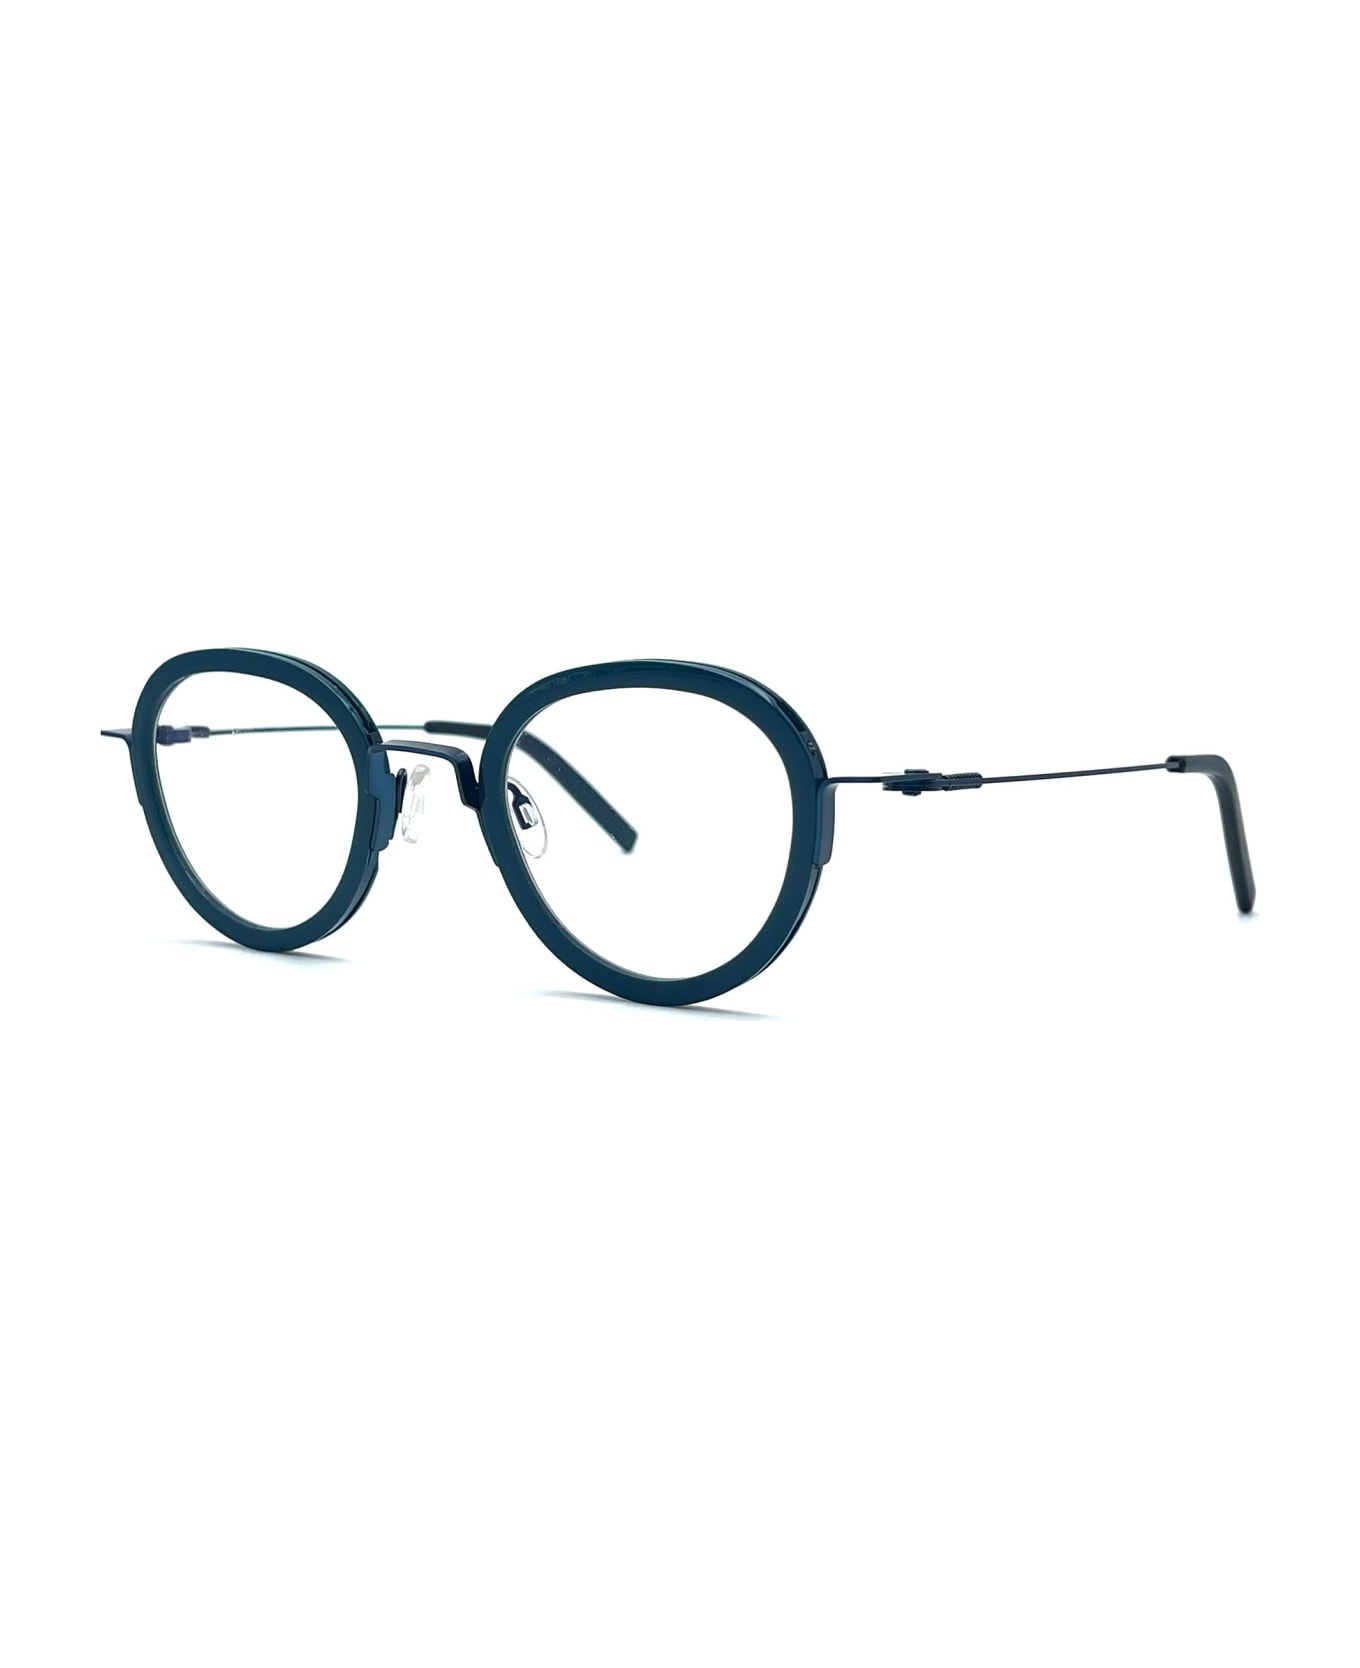 Theo Eyewear Stamppot - 44 Glasses - blue アイウェア